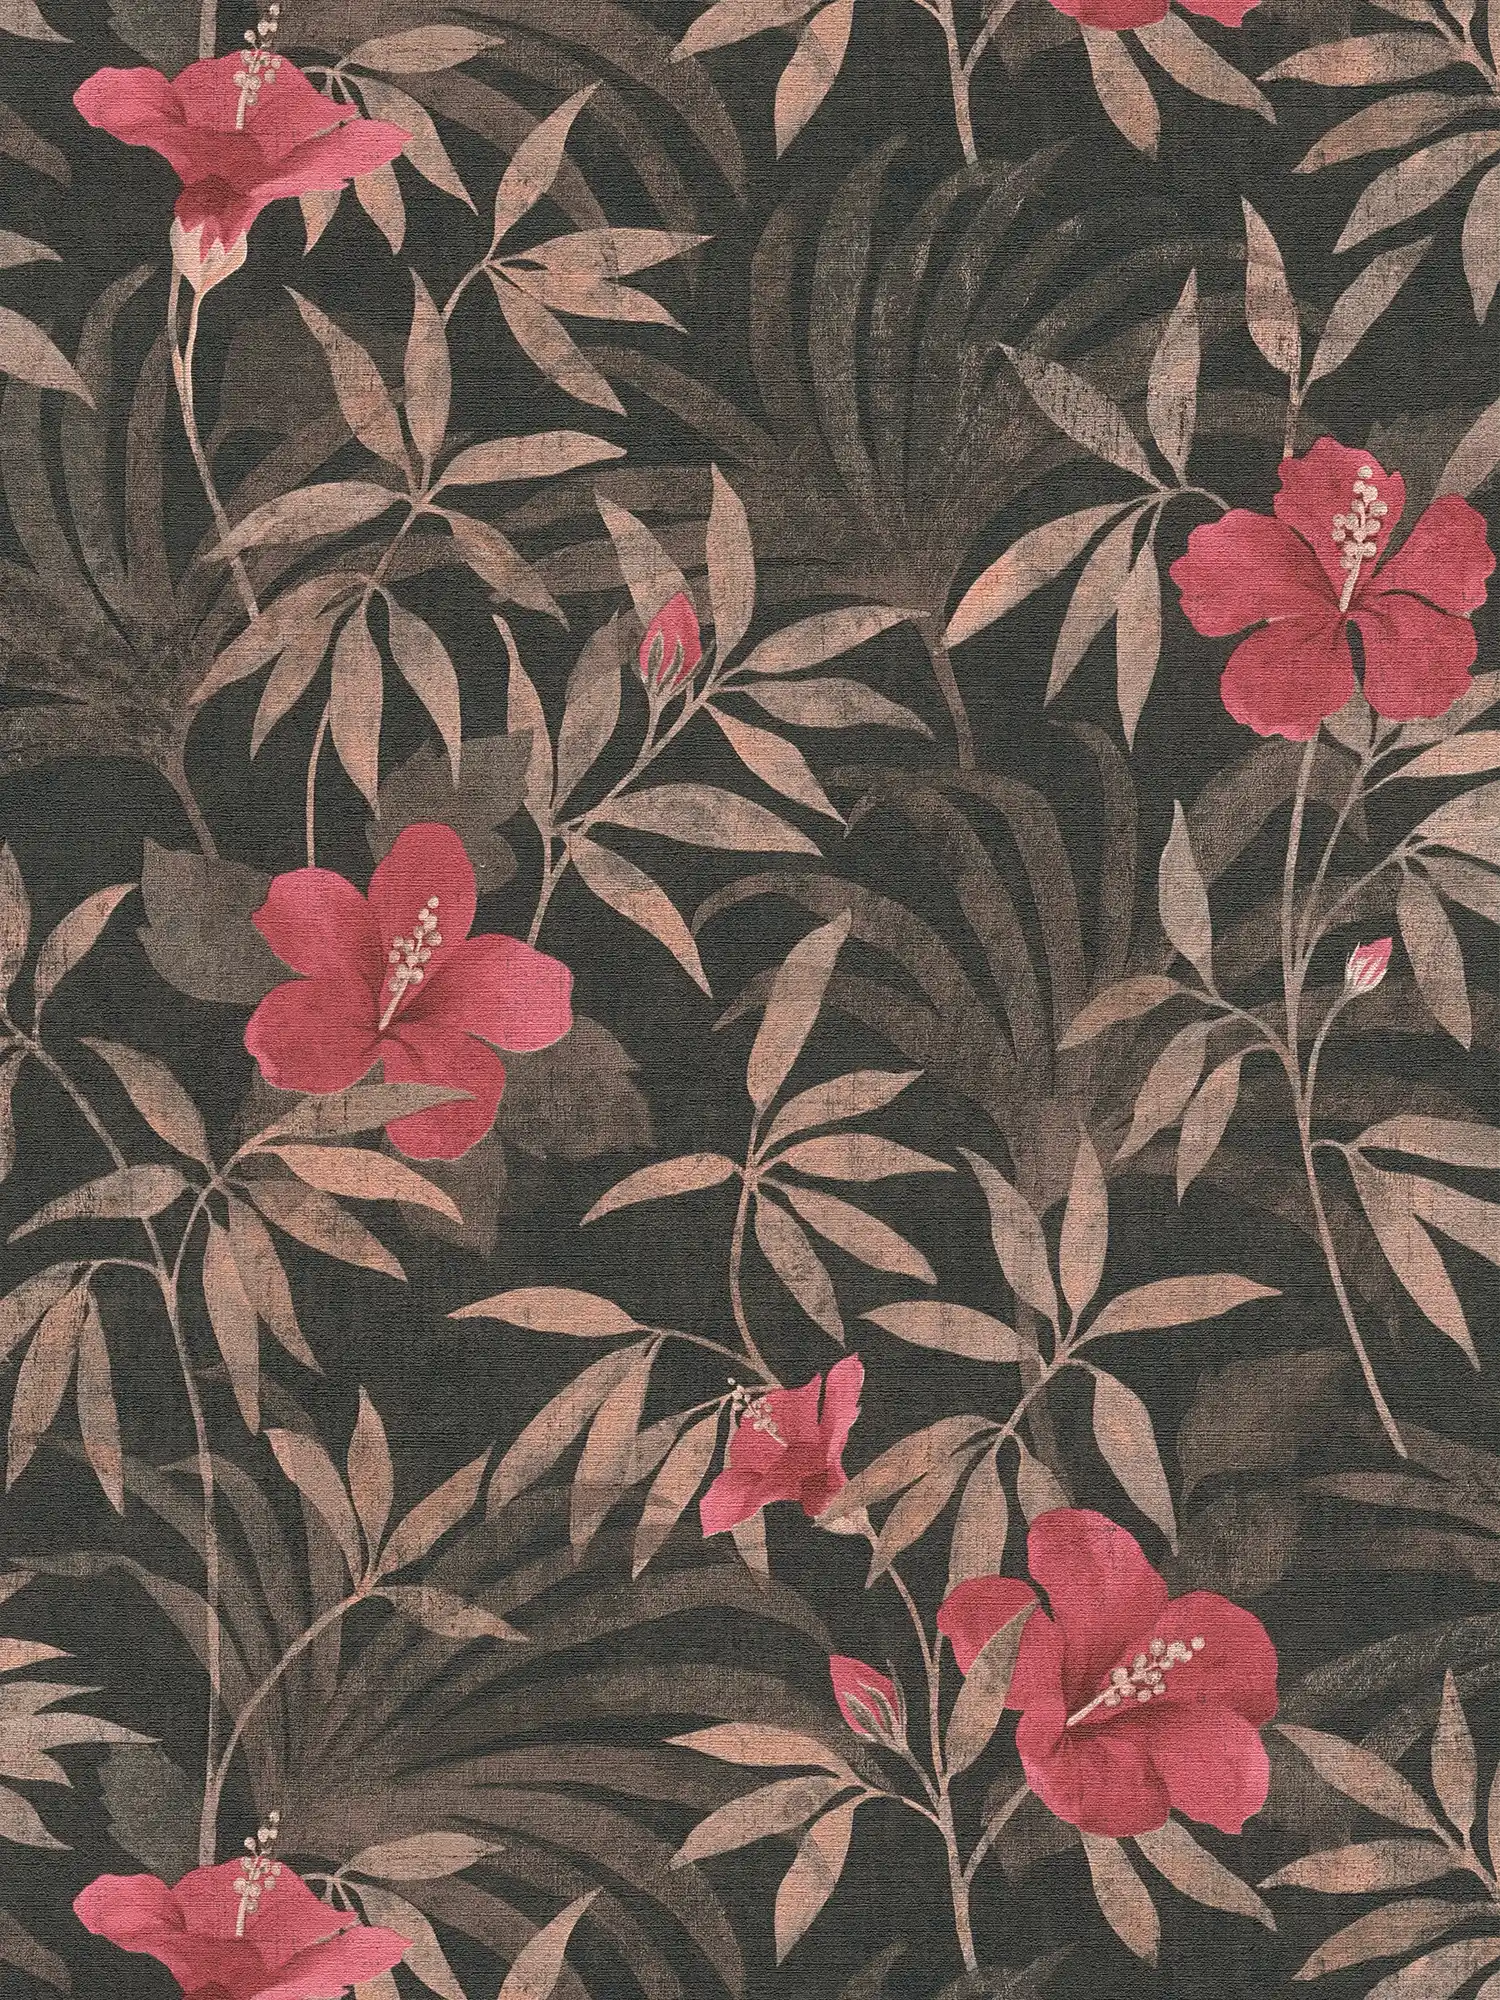 Wallpaper jungle leaves & hibiscus flowers - brown, red
